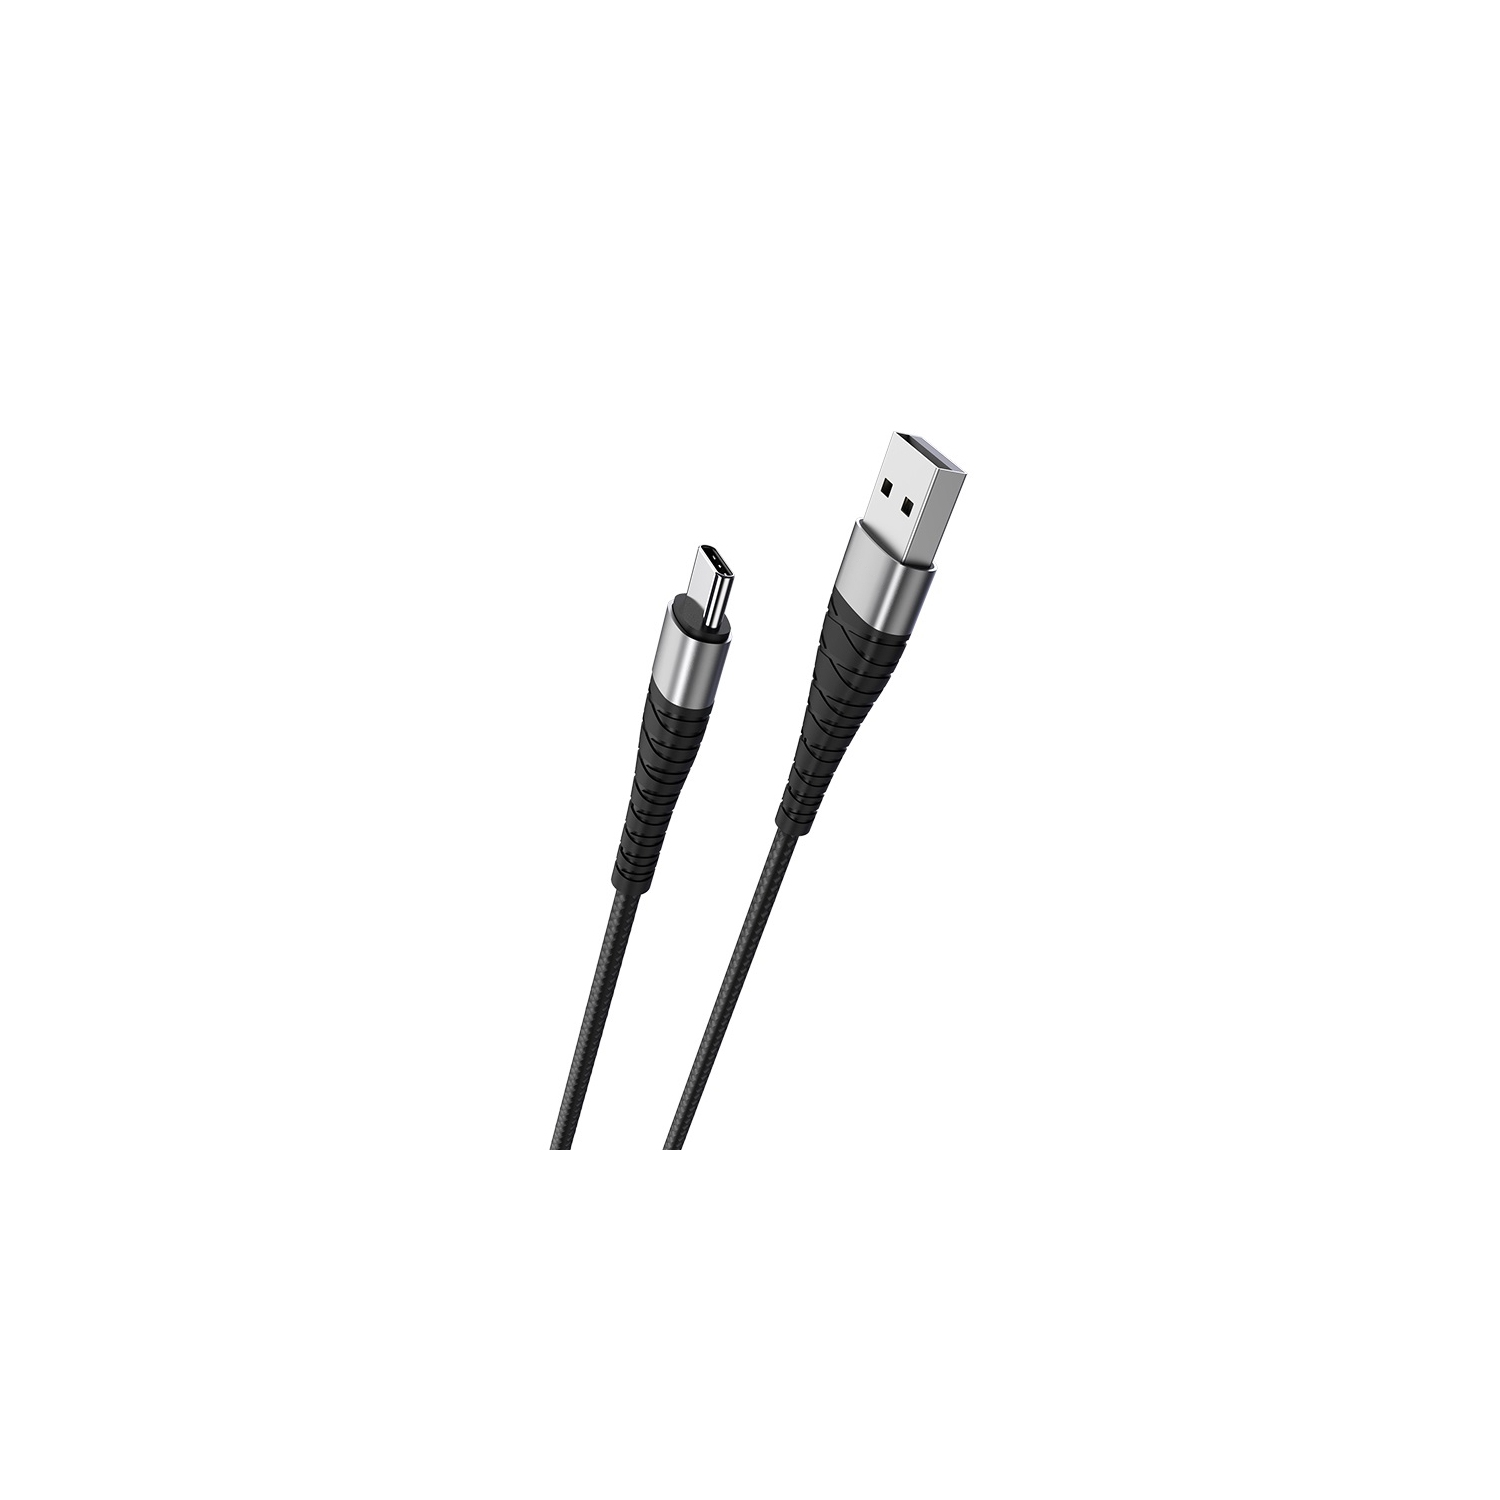 【2 Pks】 1M/3.3Ft Heavy Duty Nylon Braid USB Type C Fast Charging Data Cable Cord for Samsung Google LG Motorola Phones, Black